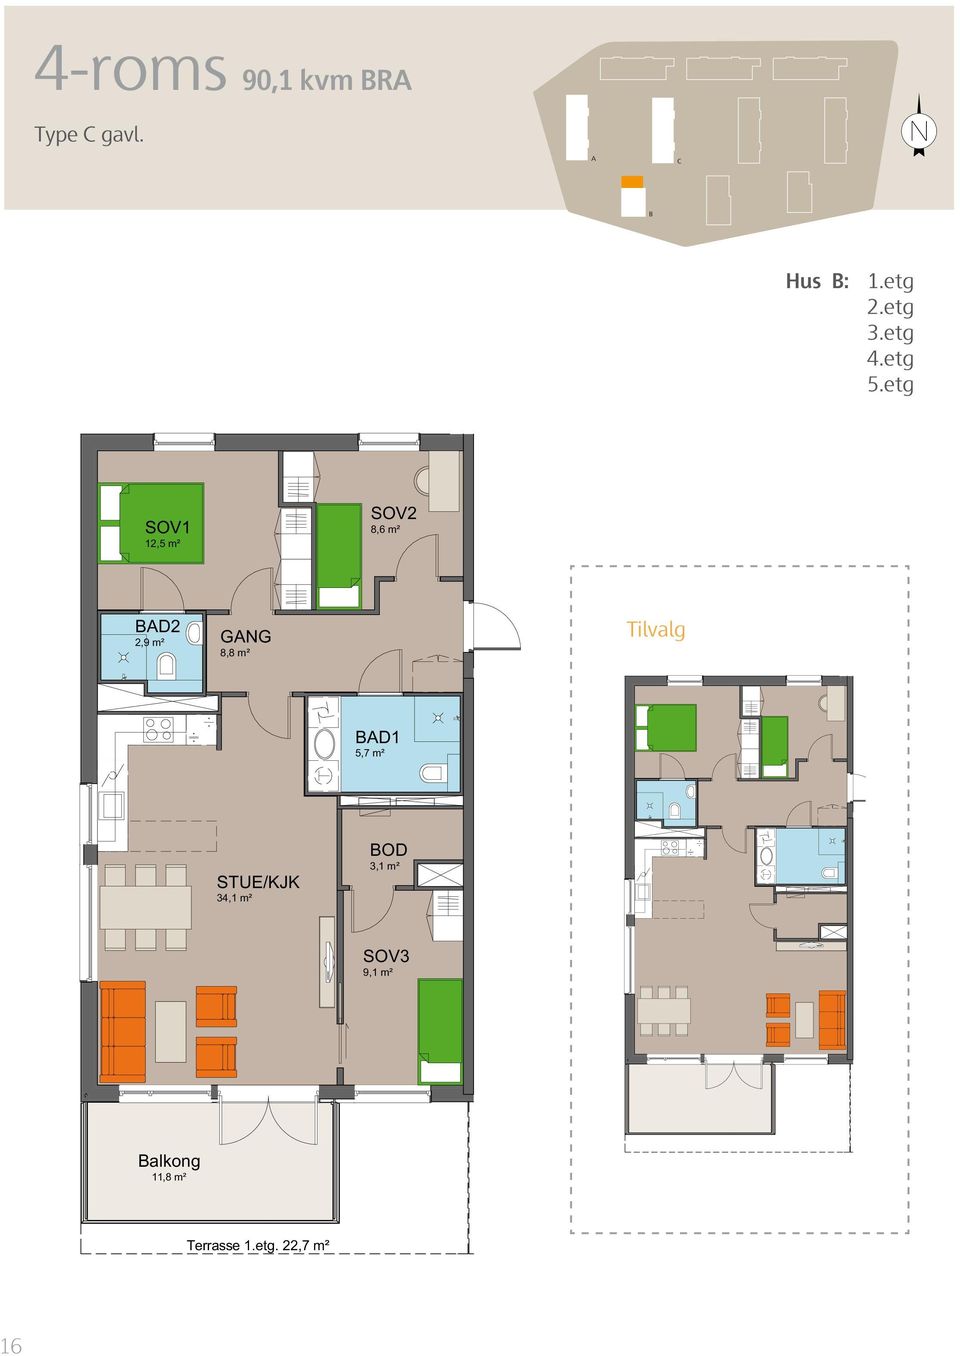 3,1 m² SOV3 9,1 m² S 12 alkong 11,8 m² Terrasse 1.etg.